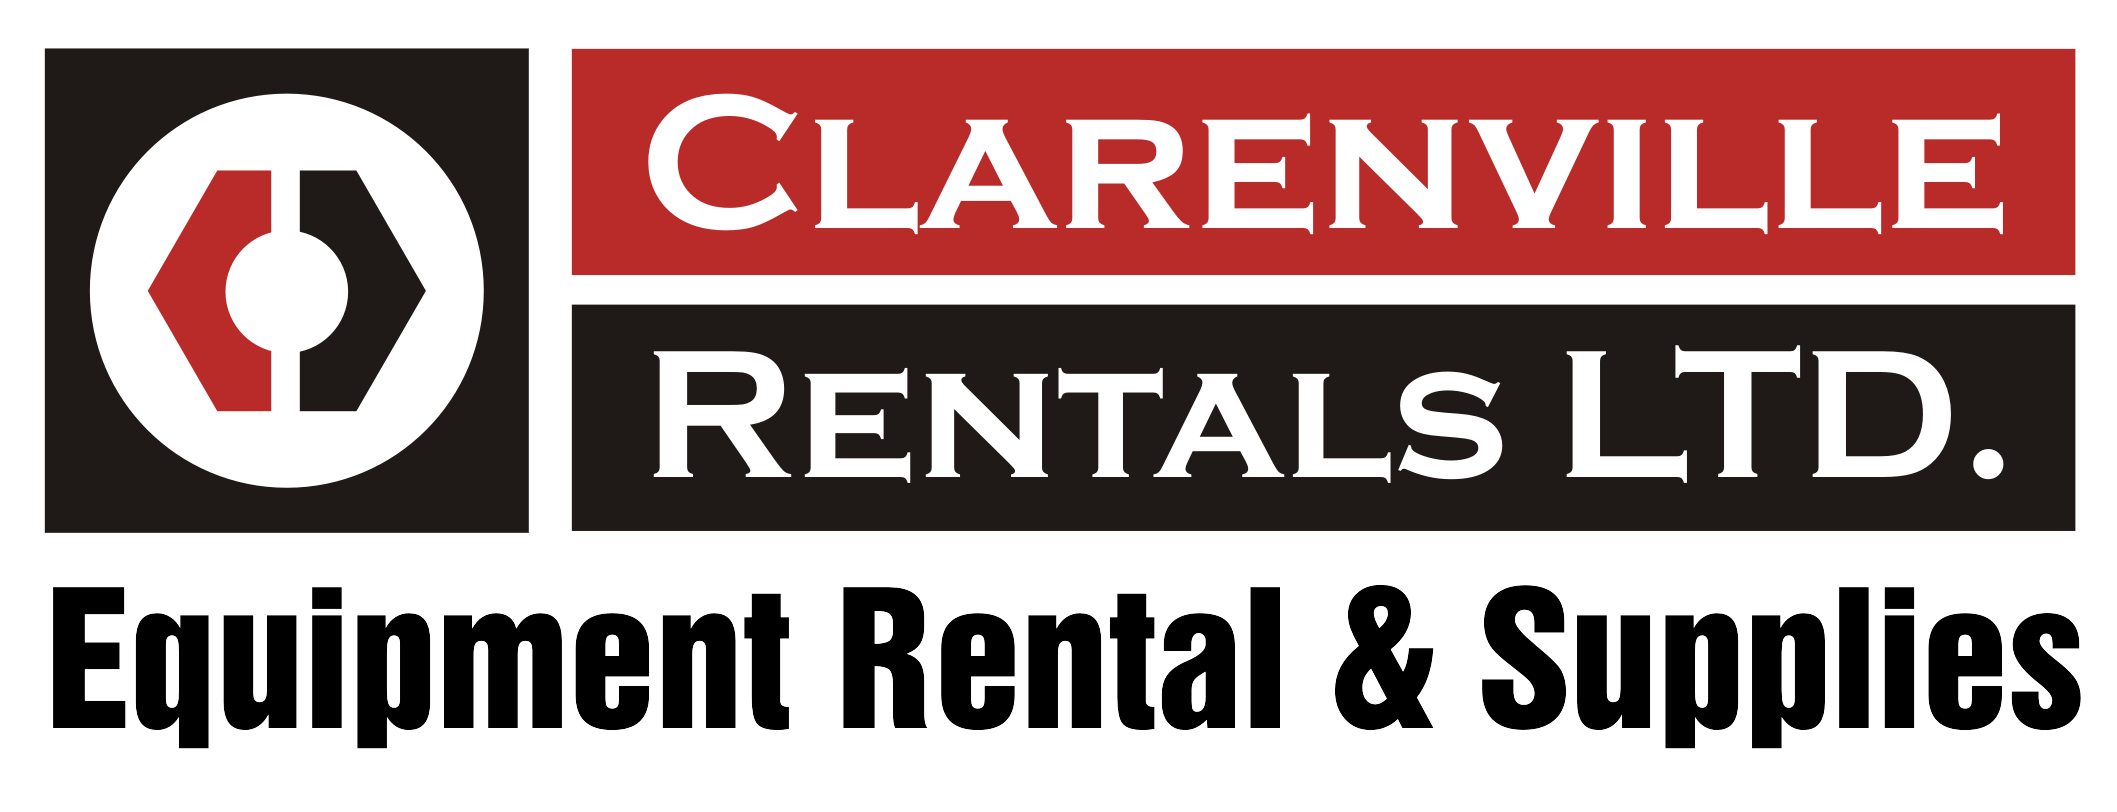 Clarenville Rentals | Tools, Rentals, and Used Equipment